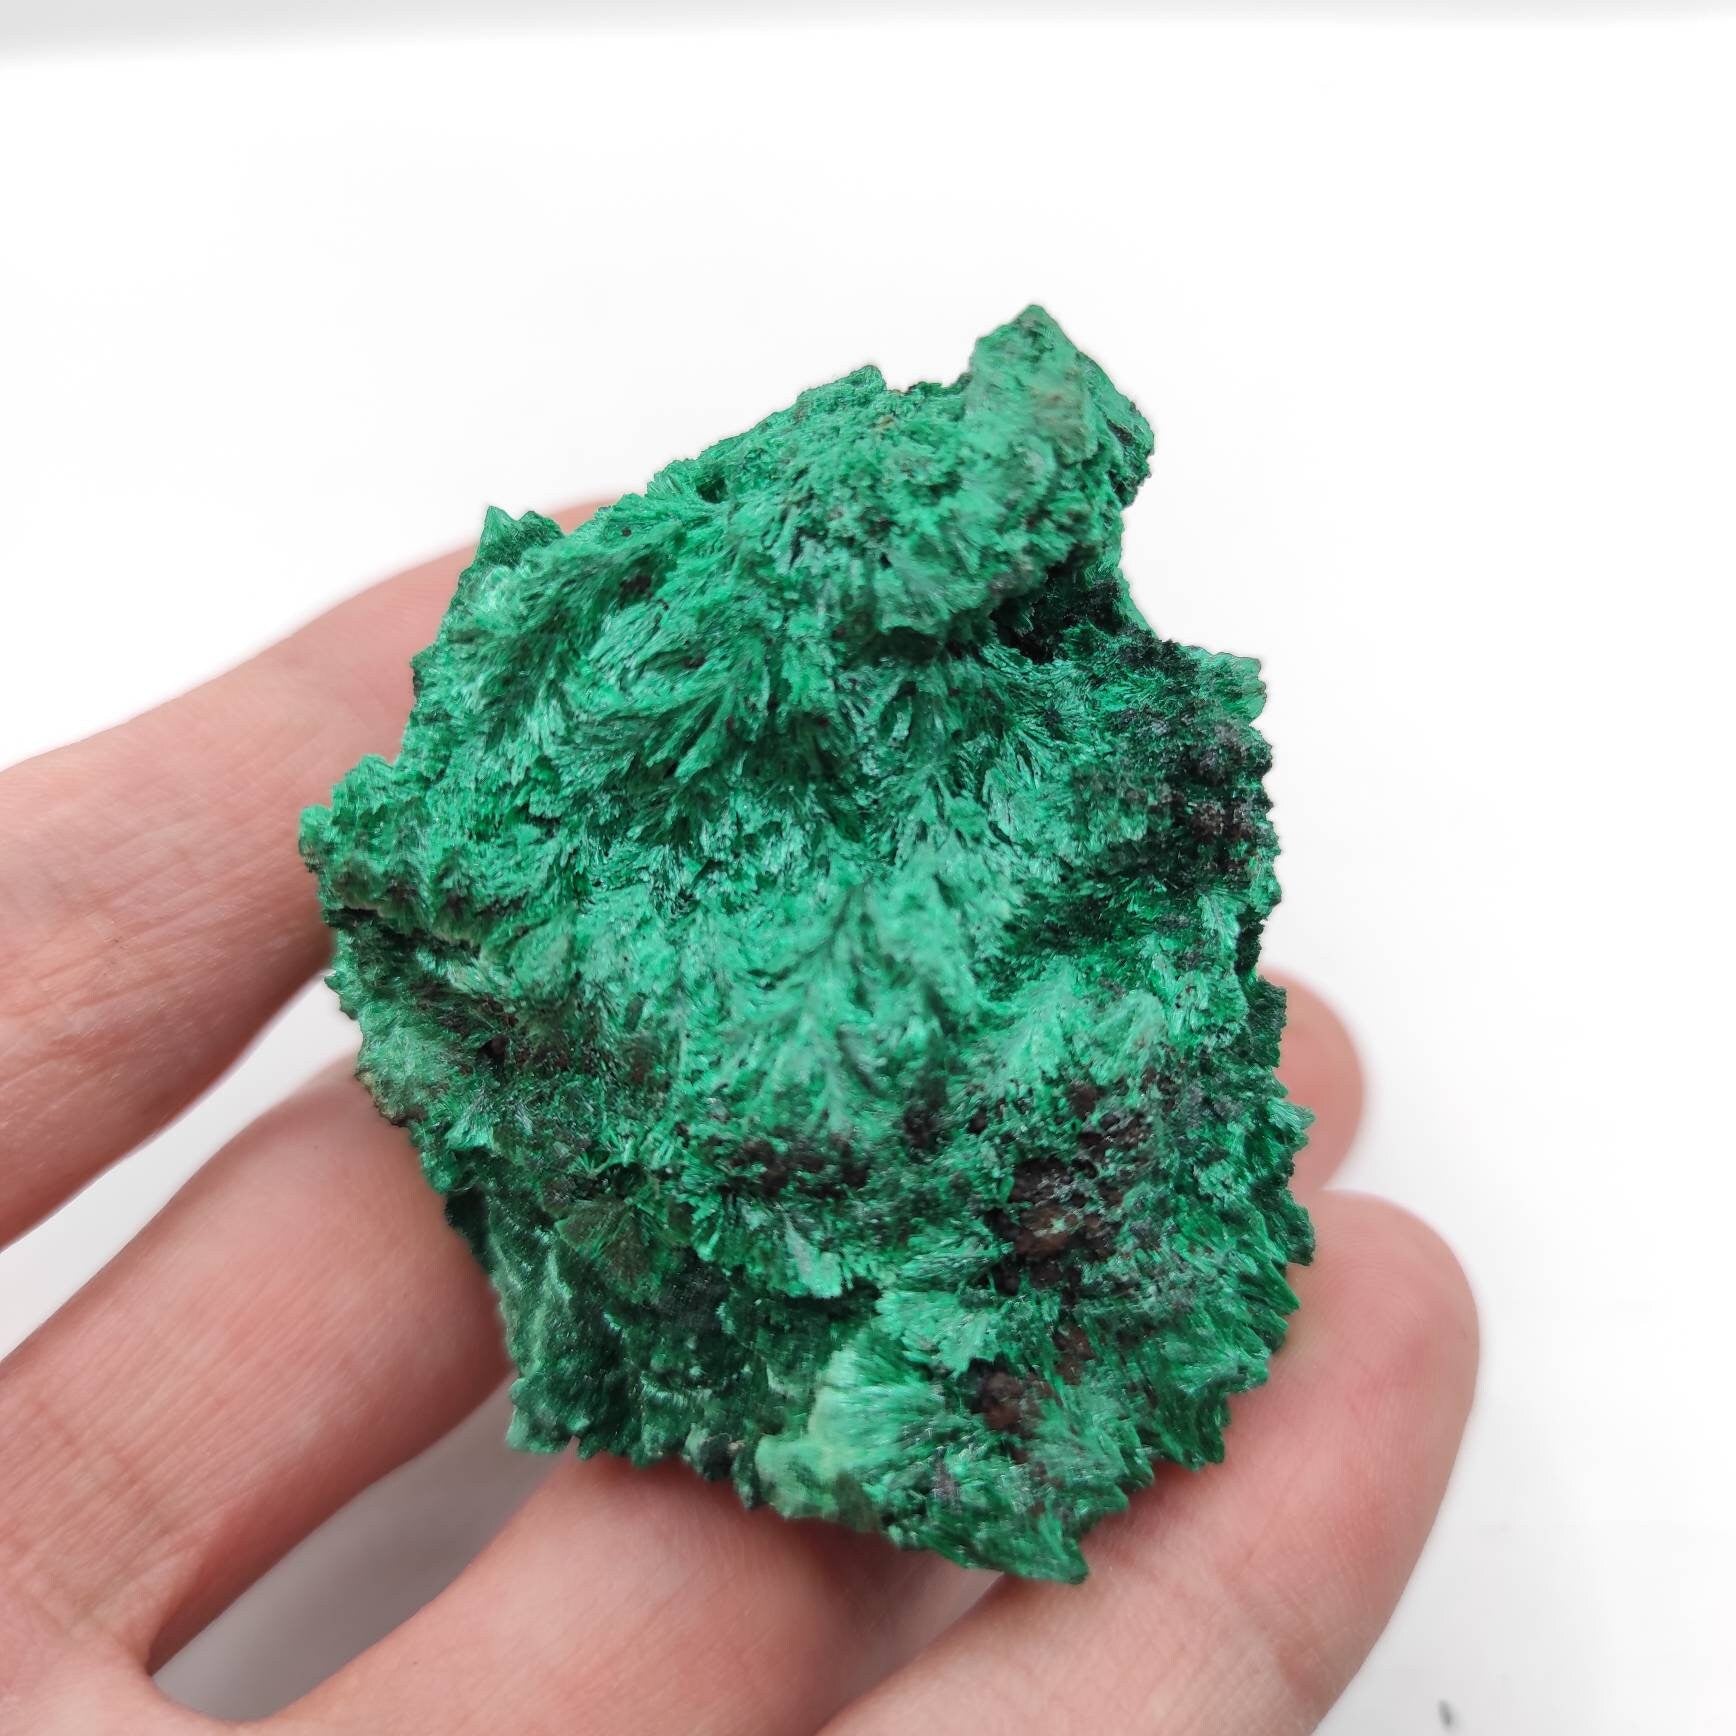 99g Fibrous Malachite Hubei Malachite Natural Malachite Sparkling Malachite Raw Mineral Specimen Natural Crystals Green Malachite Crystal